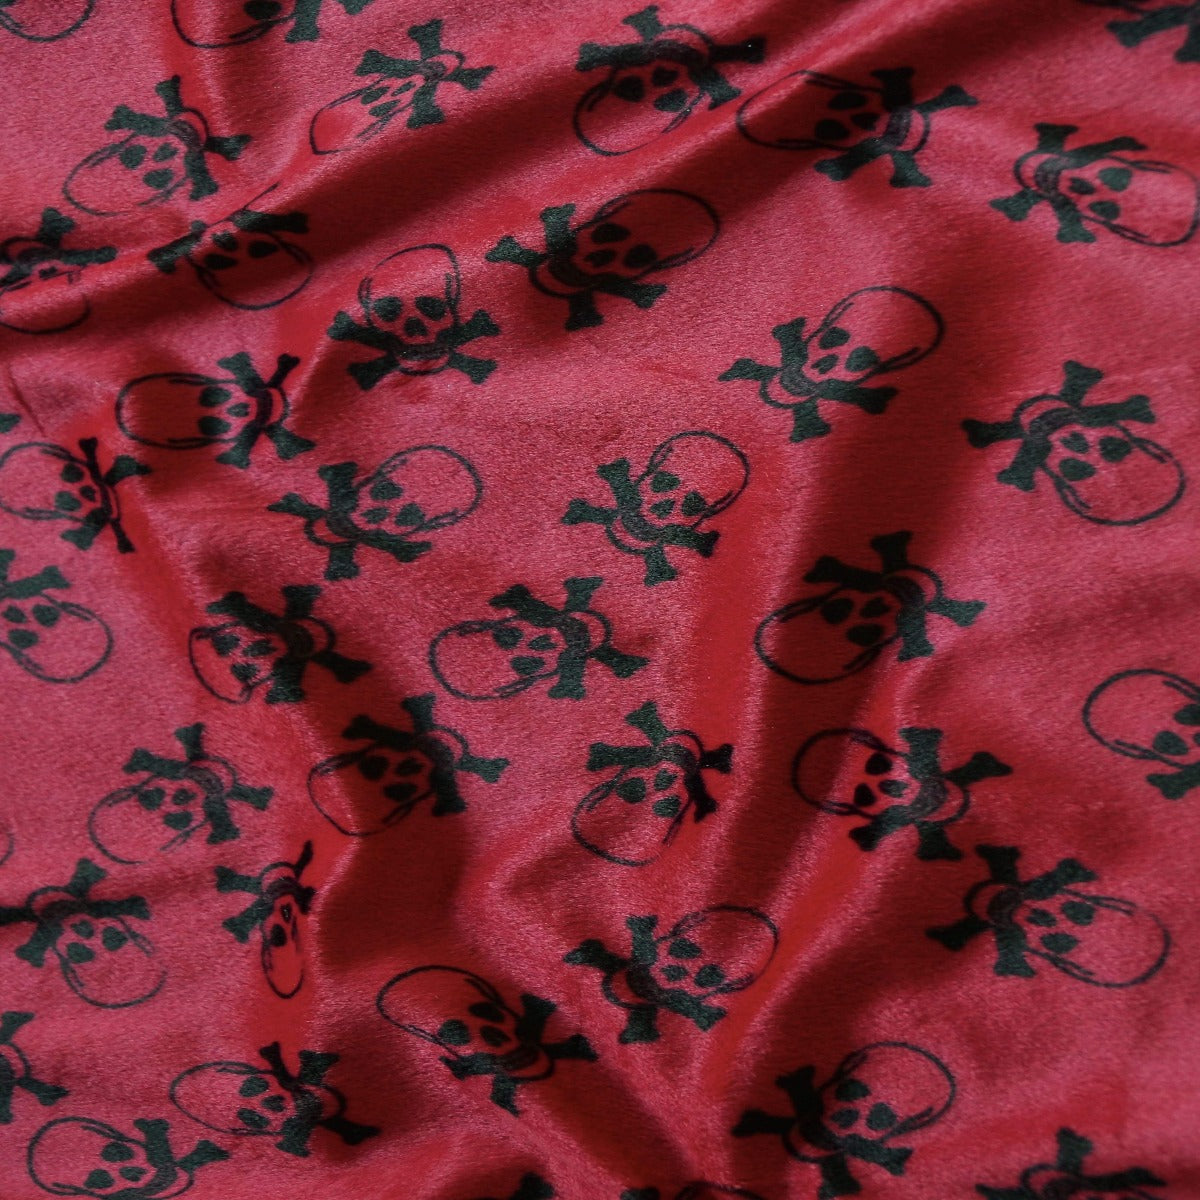 Red Velboa Skull Print Faux Fur Fabric - Fashion Fabrics Los Angeles 